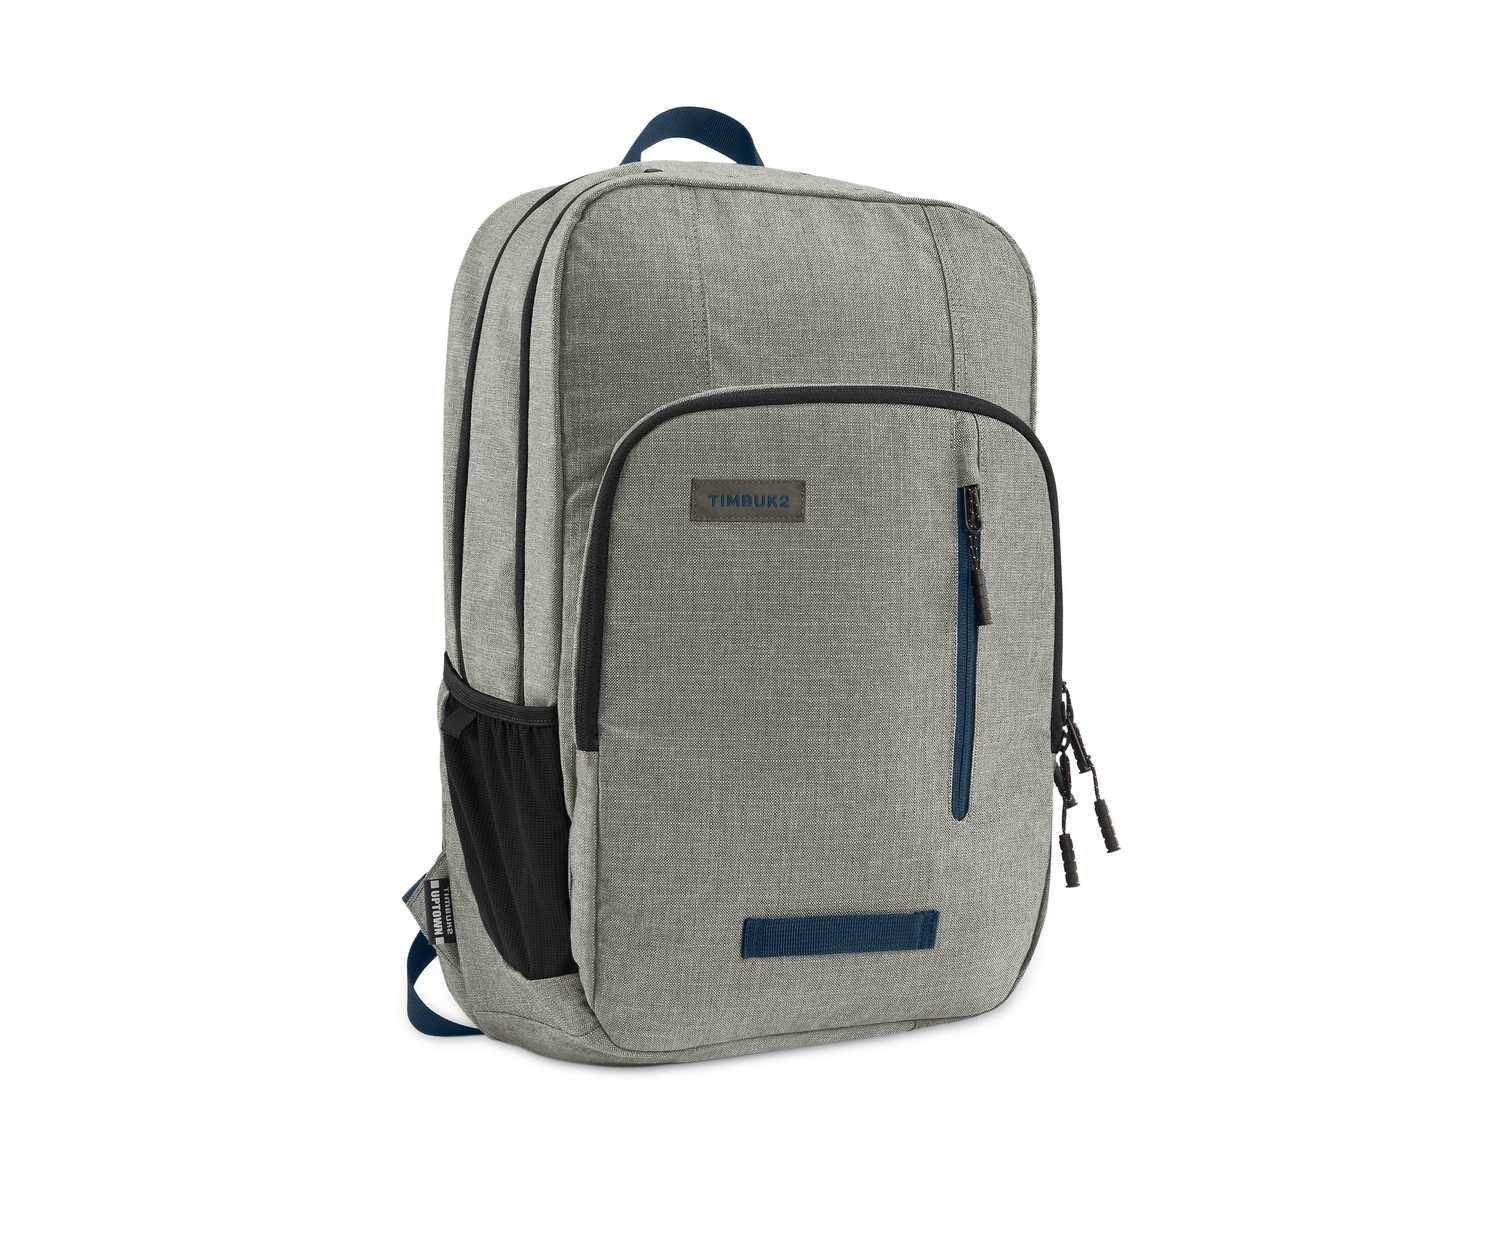 Timbuk2 252 - Uptown Backpack